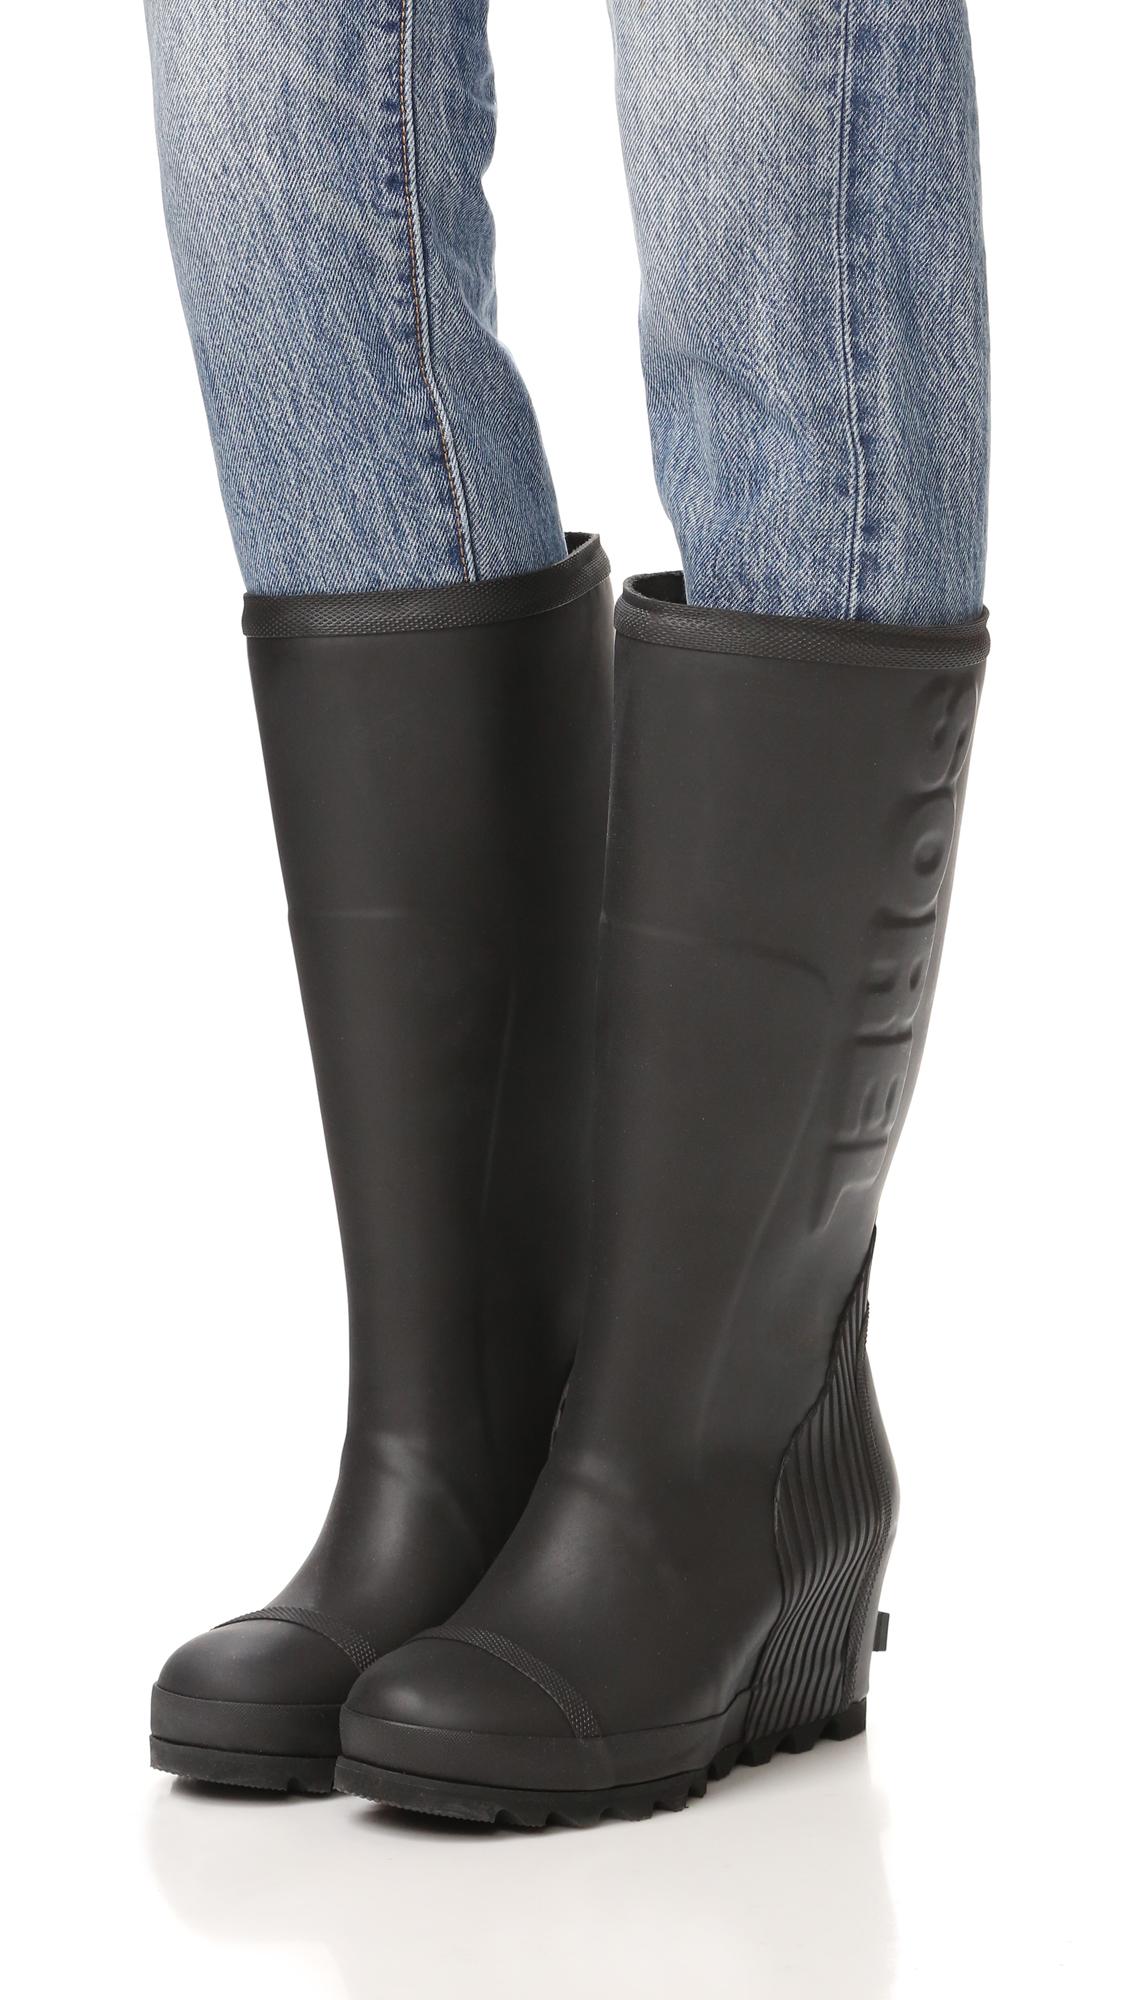 Sorel Rubber Joan Tall Rain Wedge Boots in Black - Lyst